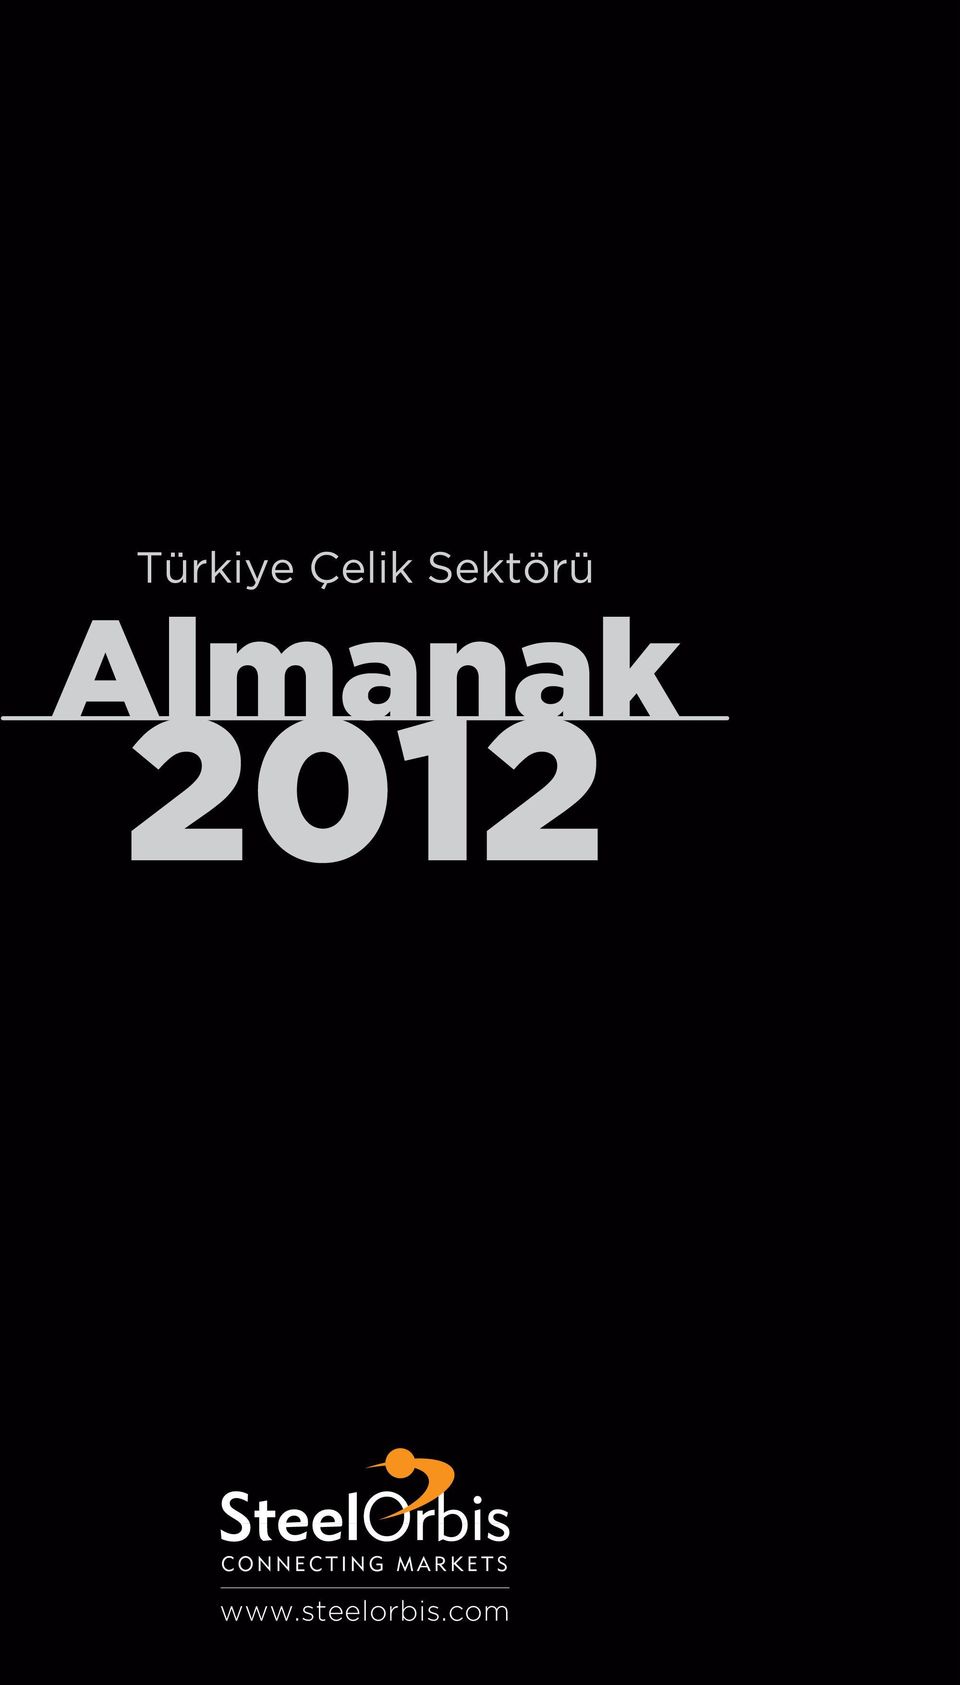 Almanak 2012